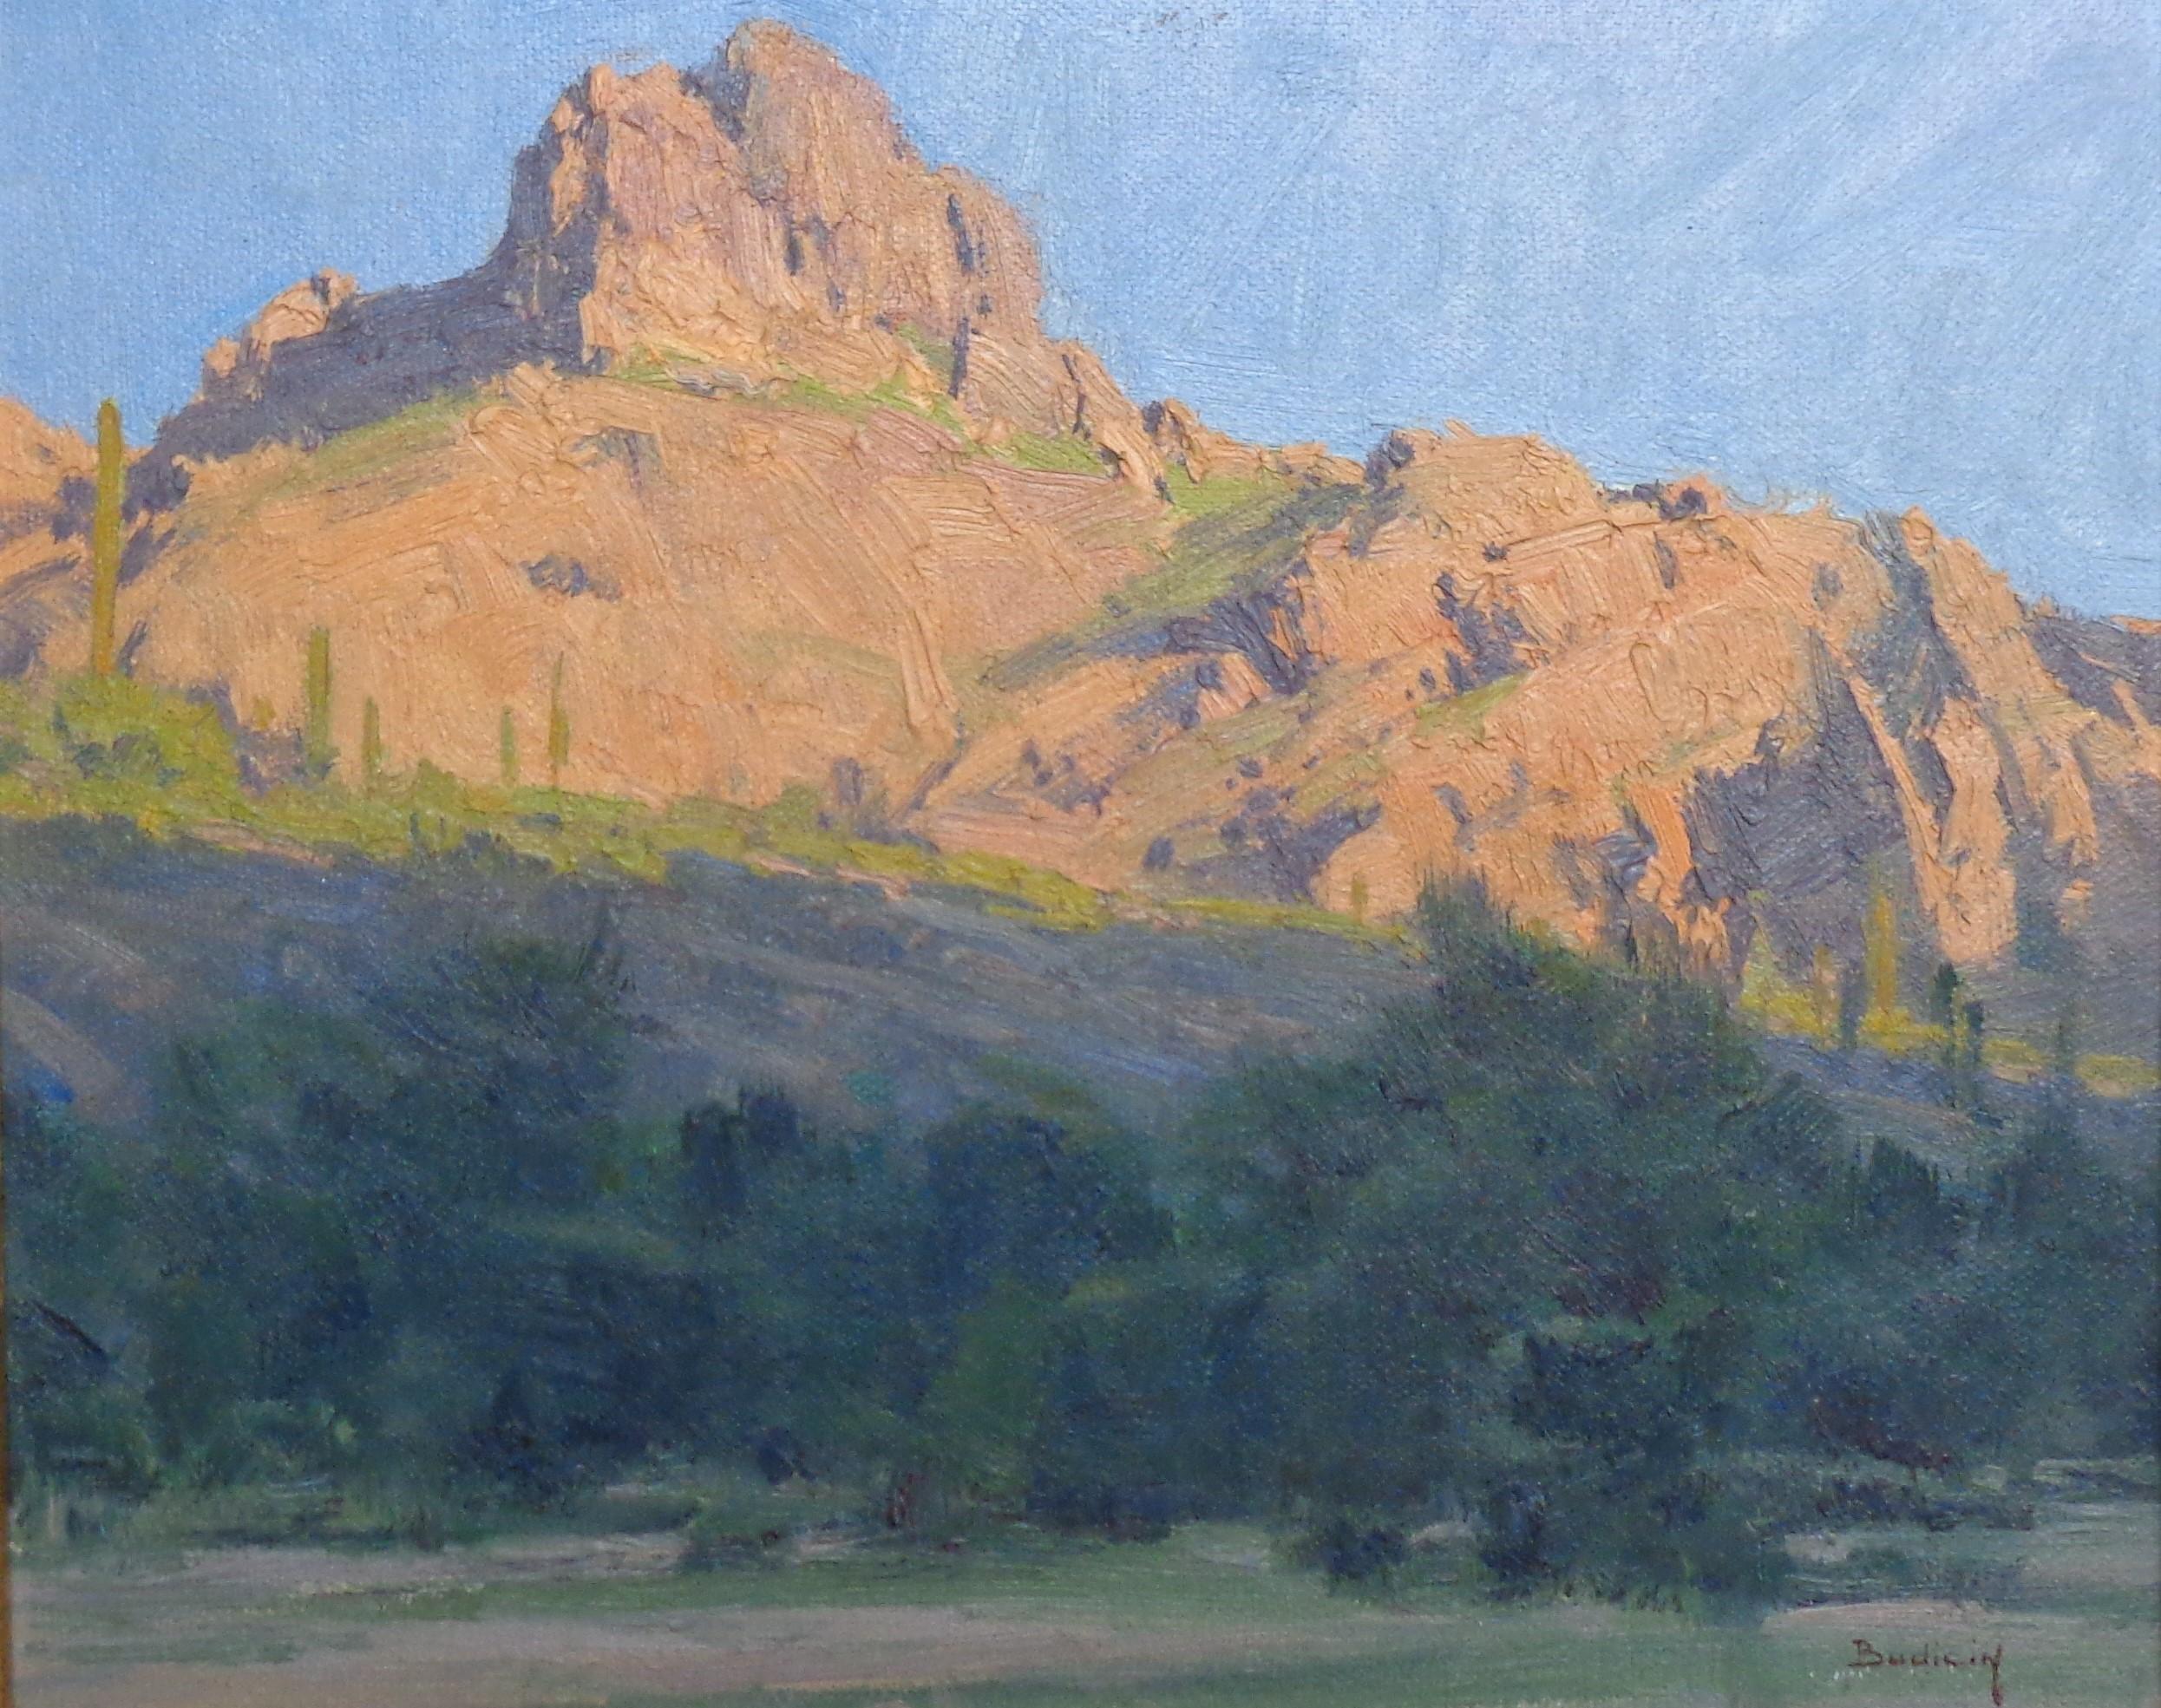  California Landscape Oil Painting by John Budicin Scottsdale Bulldog Canyon For Sale 1